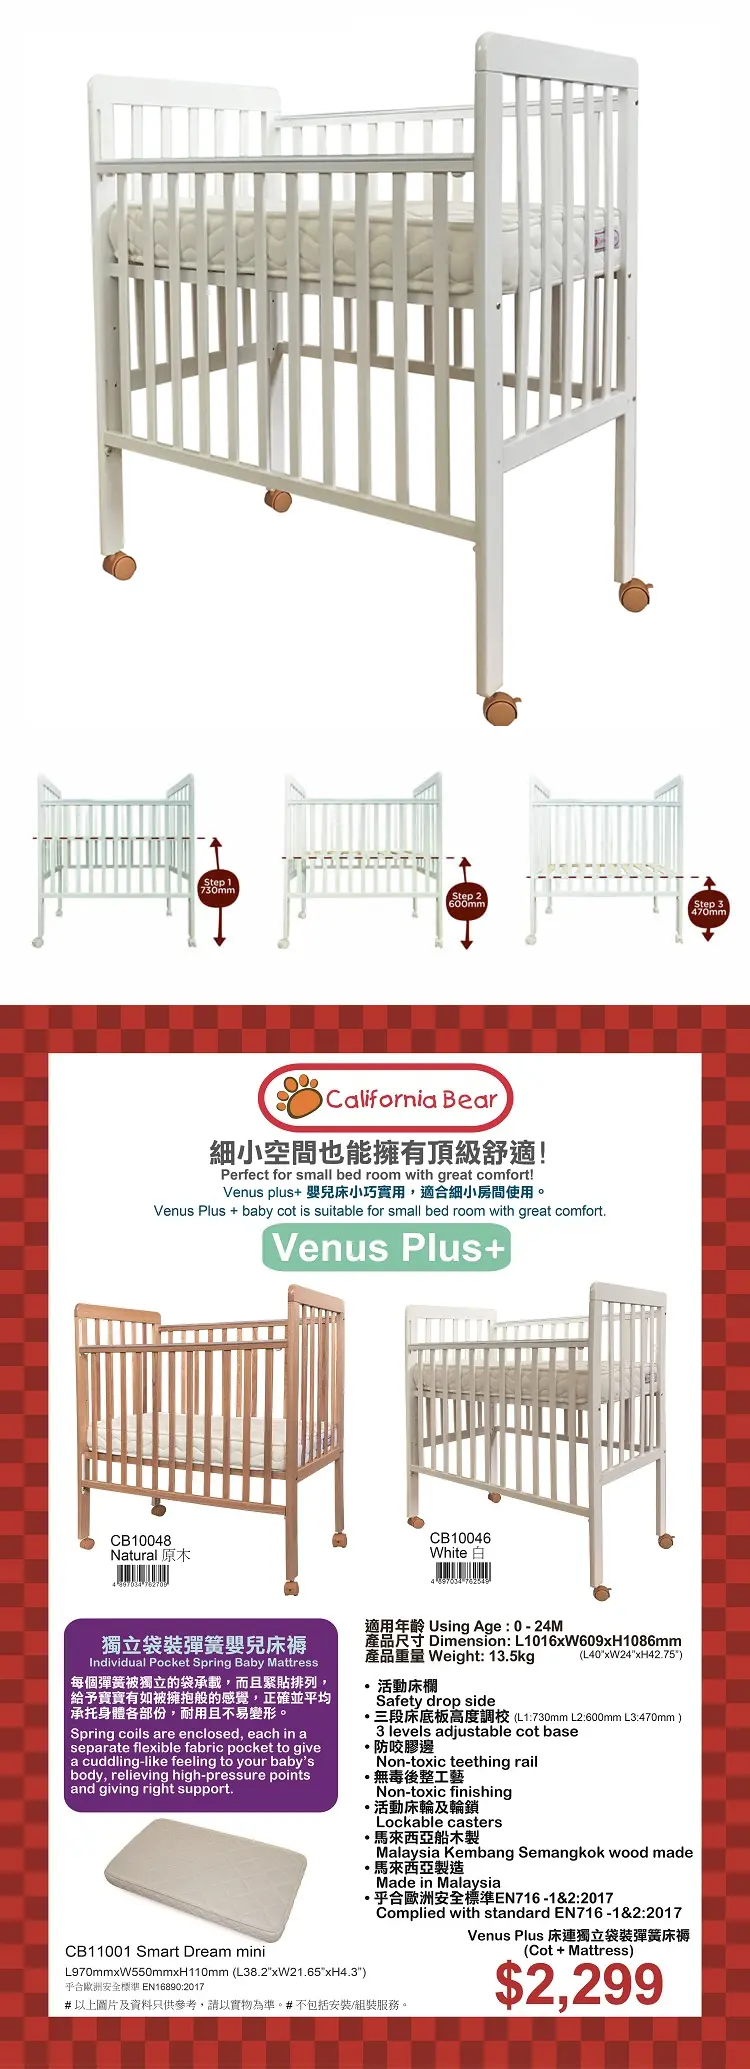 California Bear Venus Plus+ 嬰兒木床